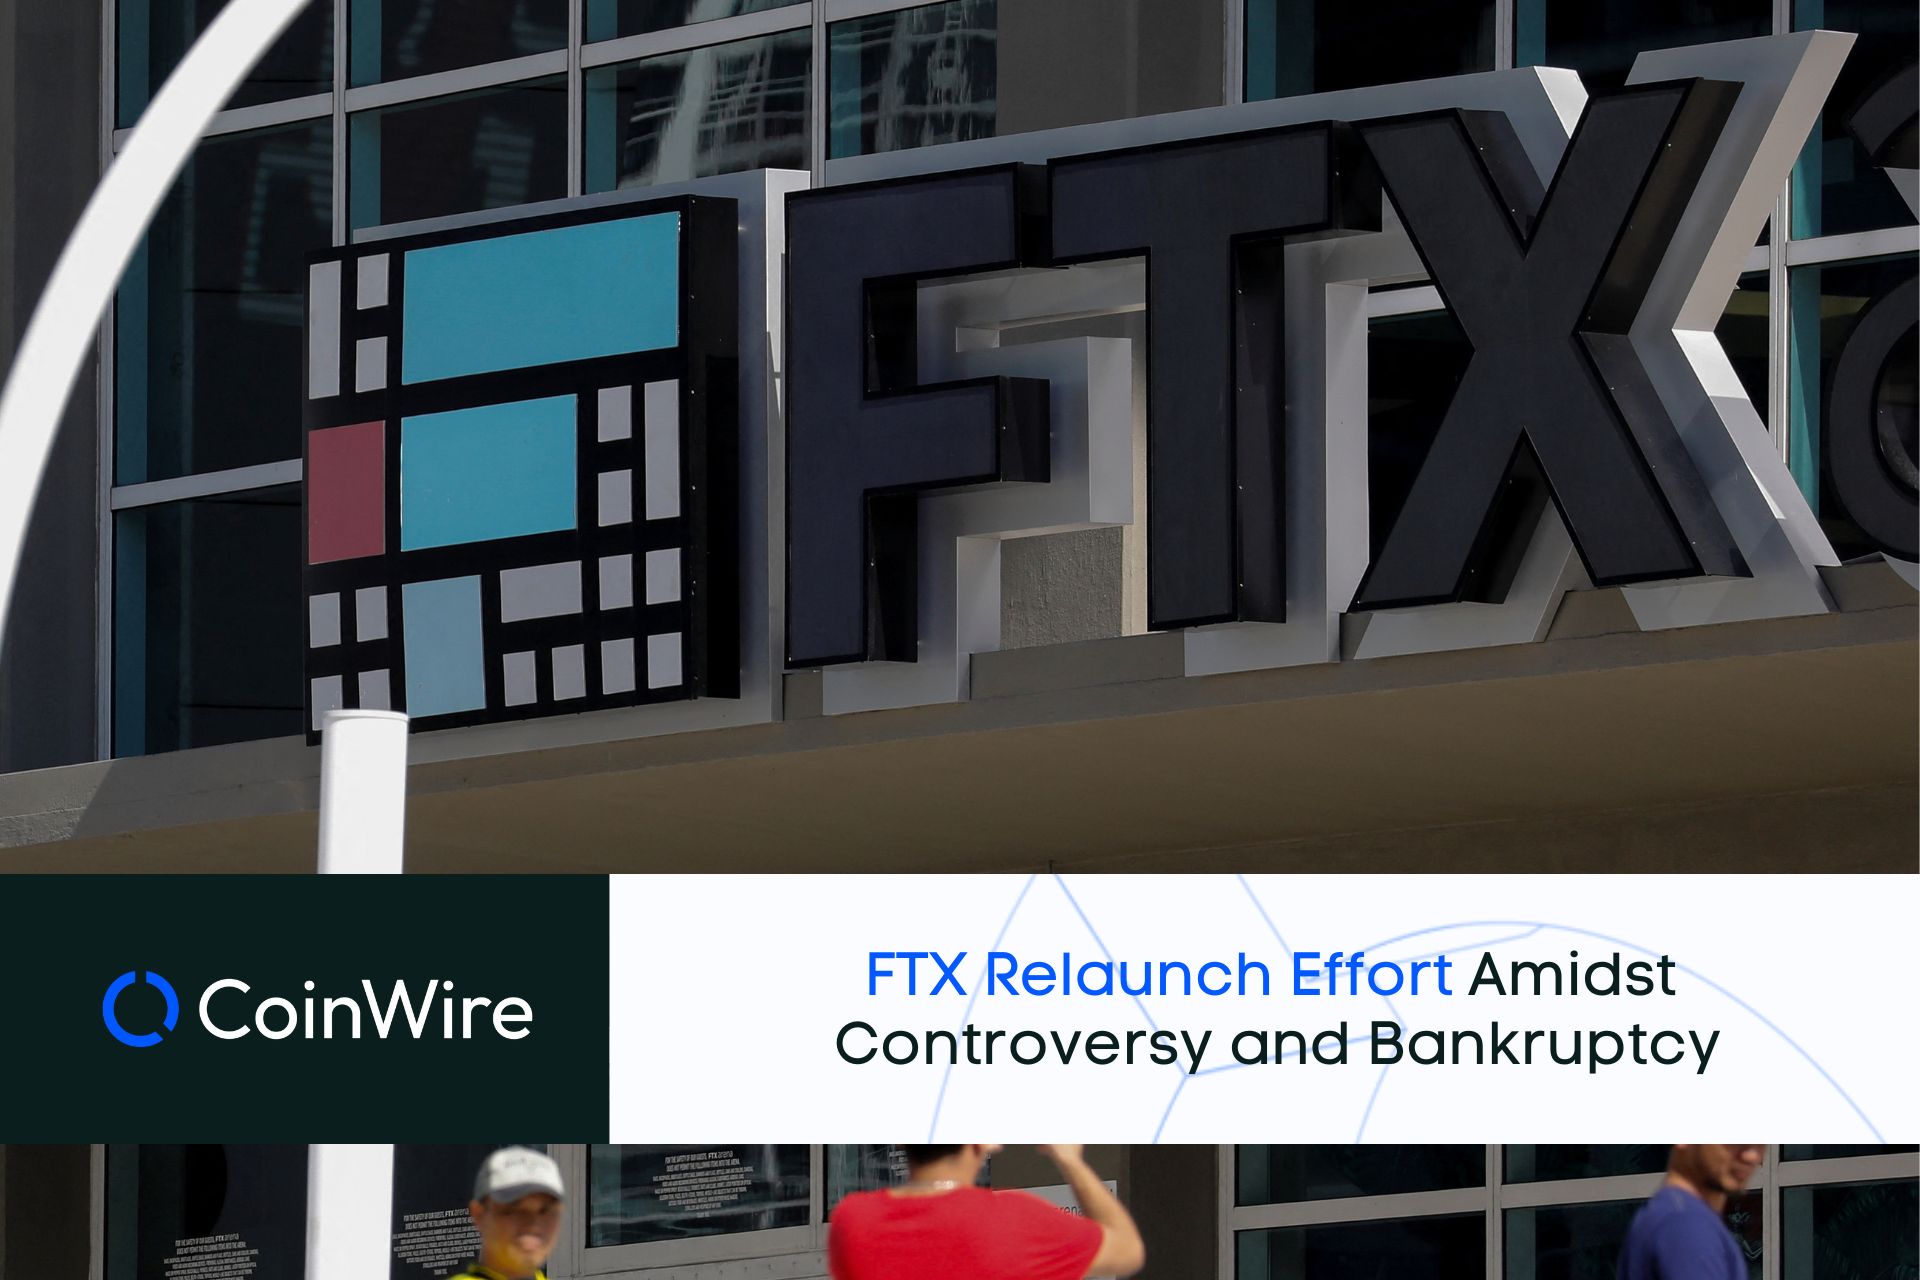 Ftx Relaunch